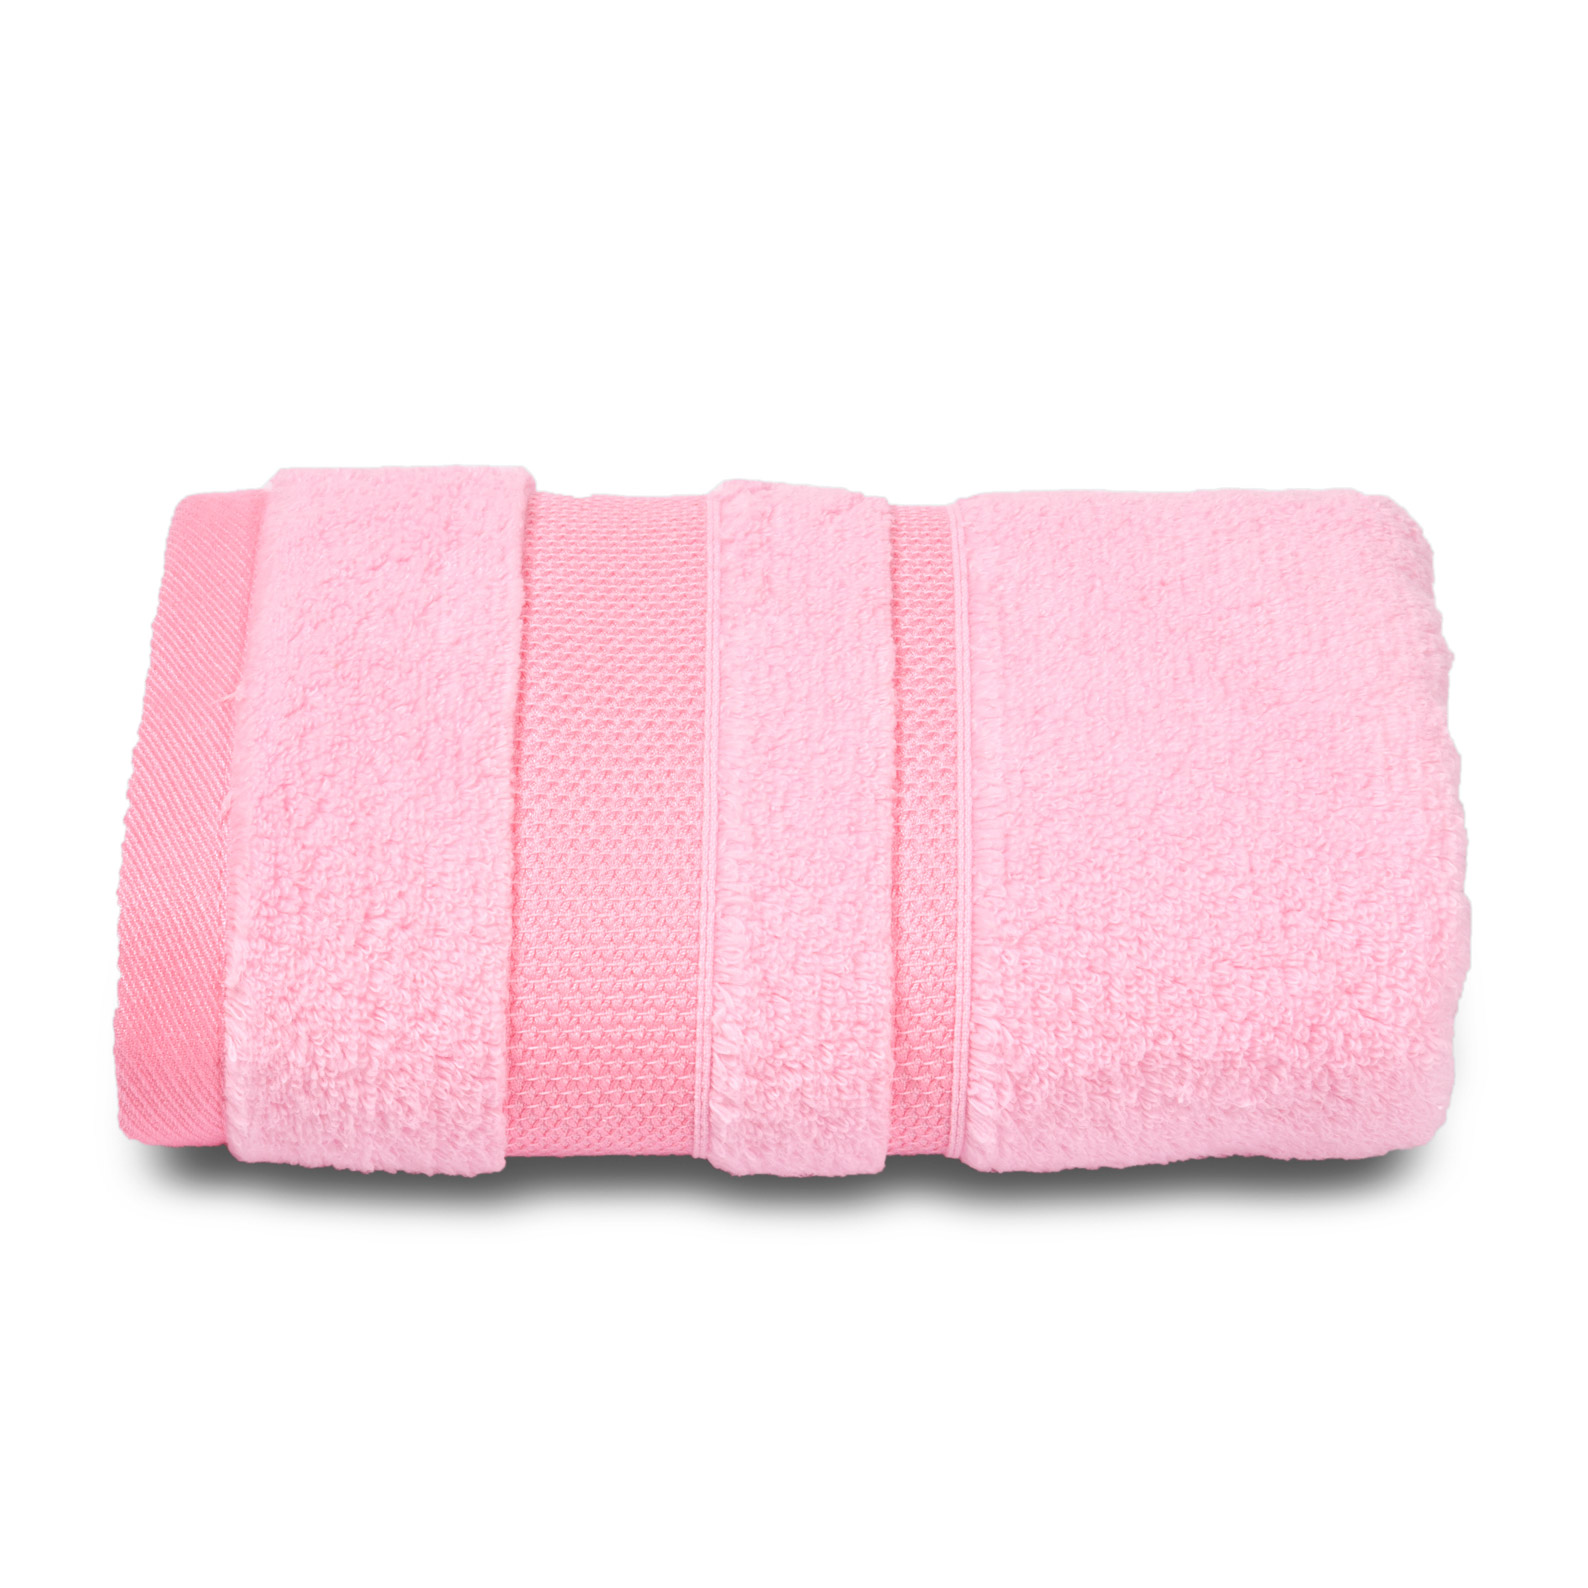 Полотенце махровое Cleanelly perfetto твист 50х100 розовый полотенце eumenia 50x100 см серое